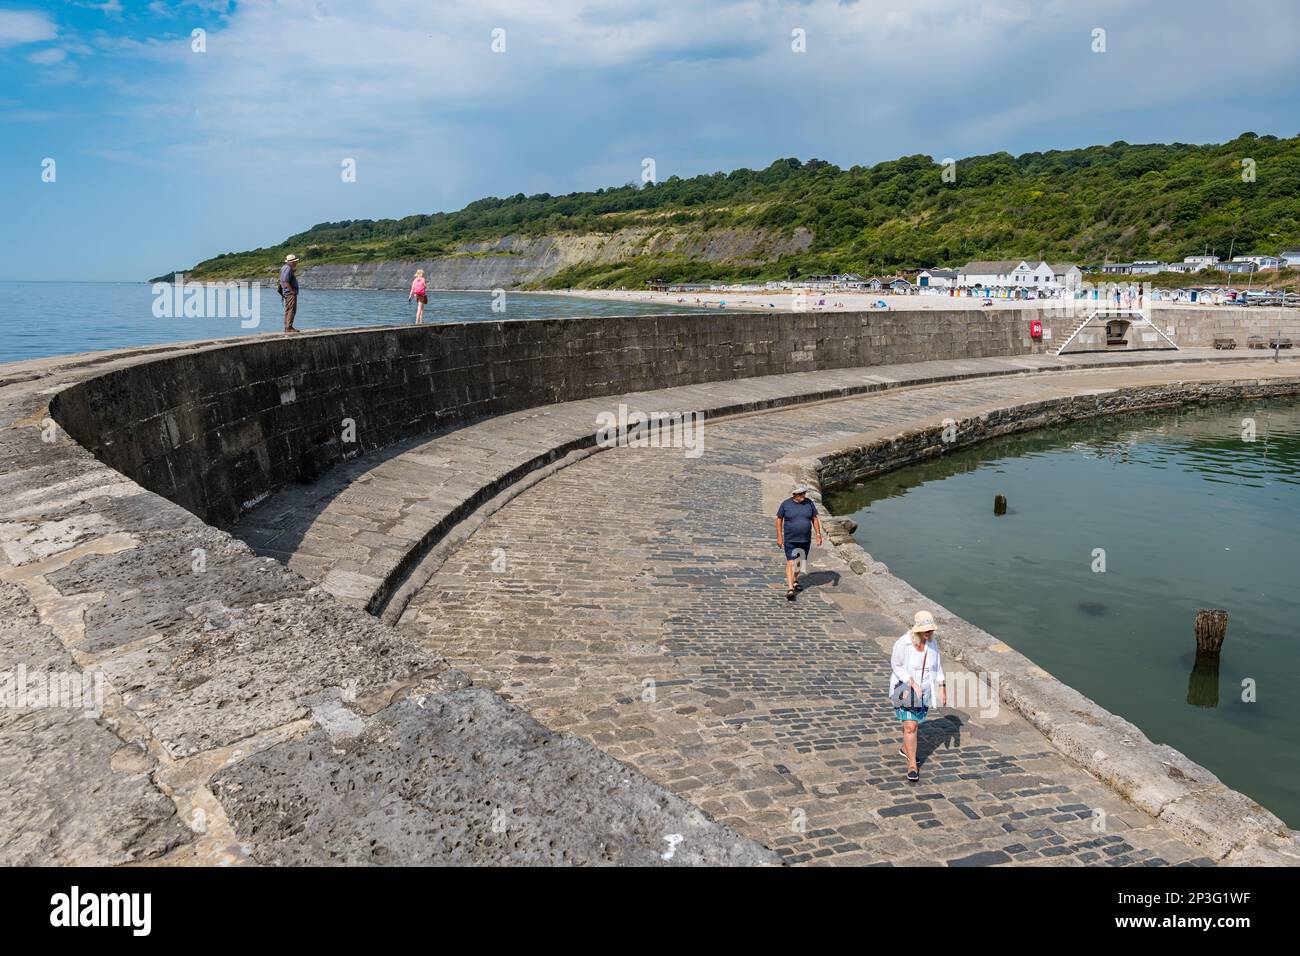 People walking on The Cobb breakwater barrier in Summer heatwave, Lyme Regis, Dorset, England, UK Stock Photo